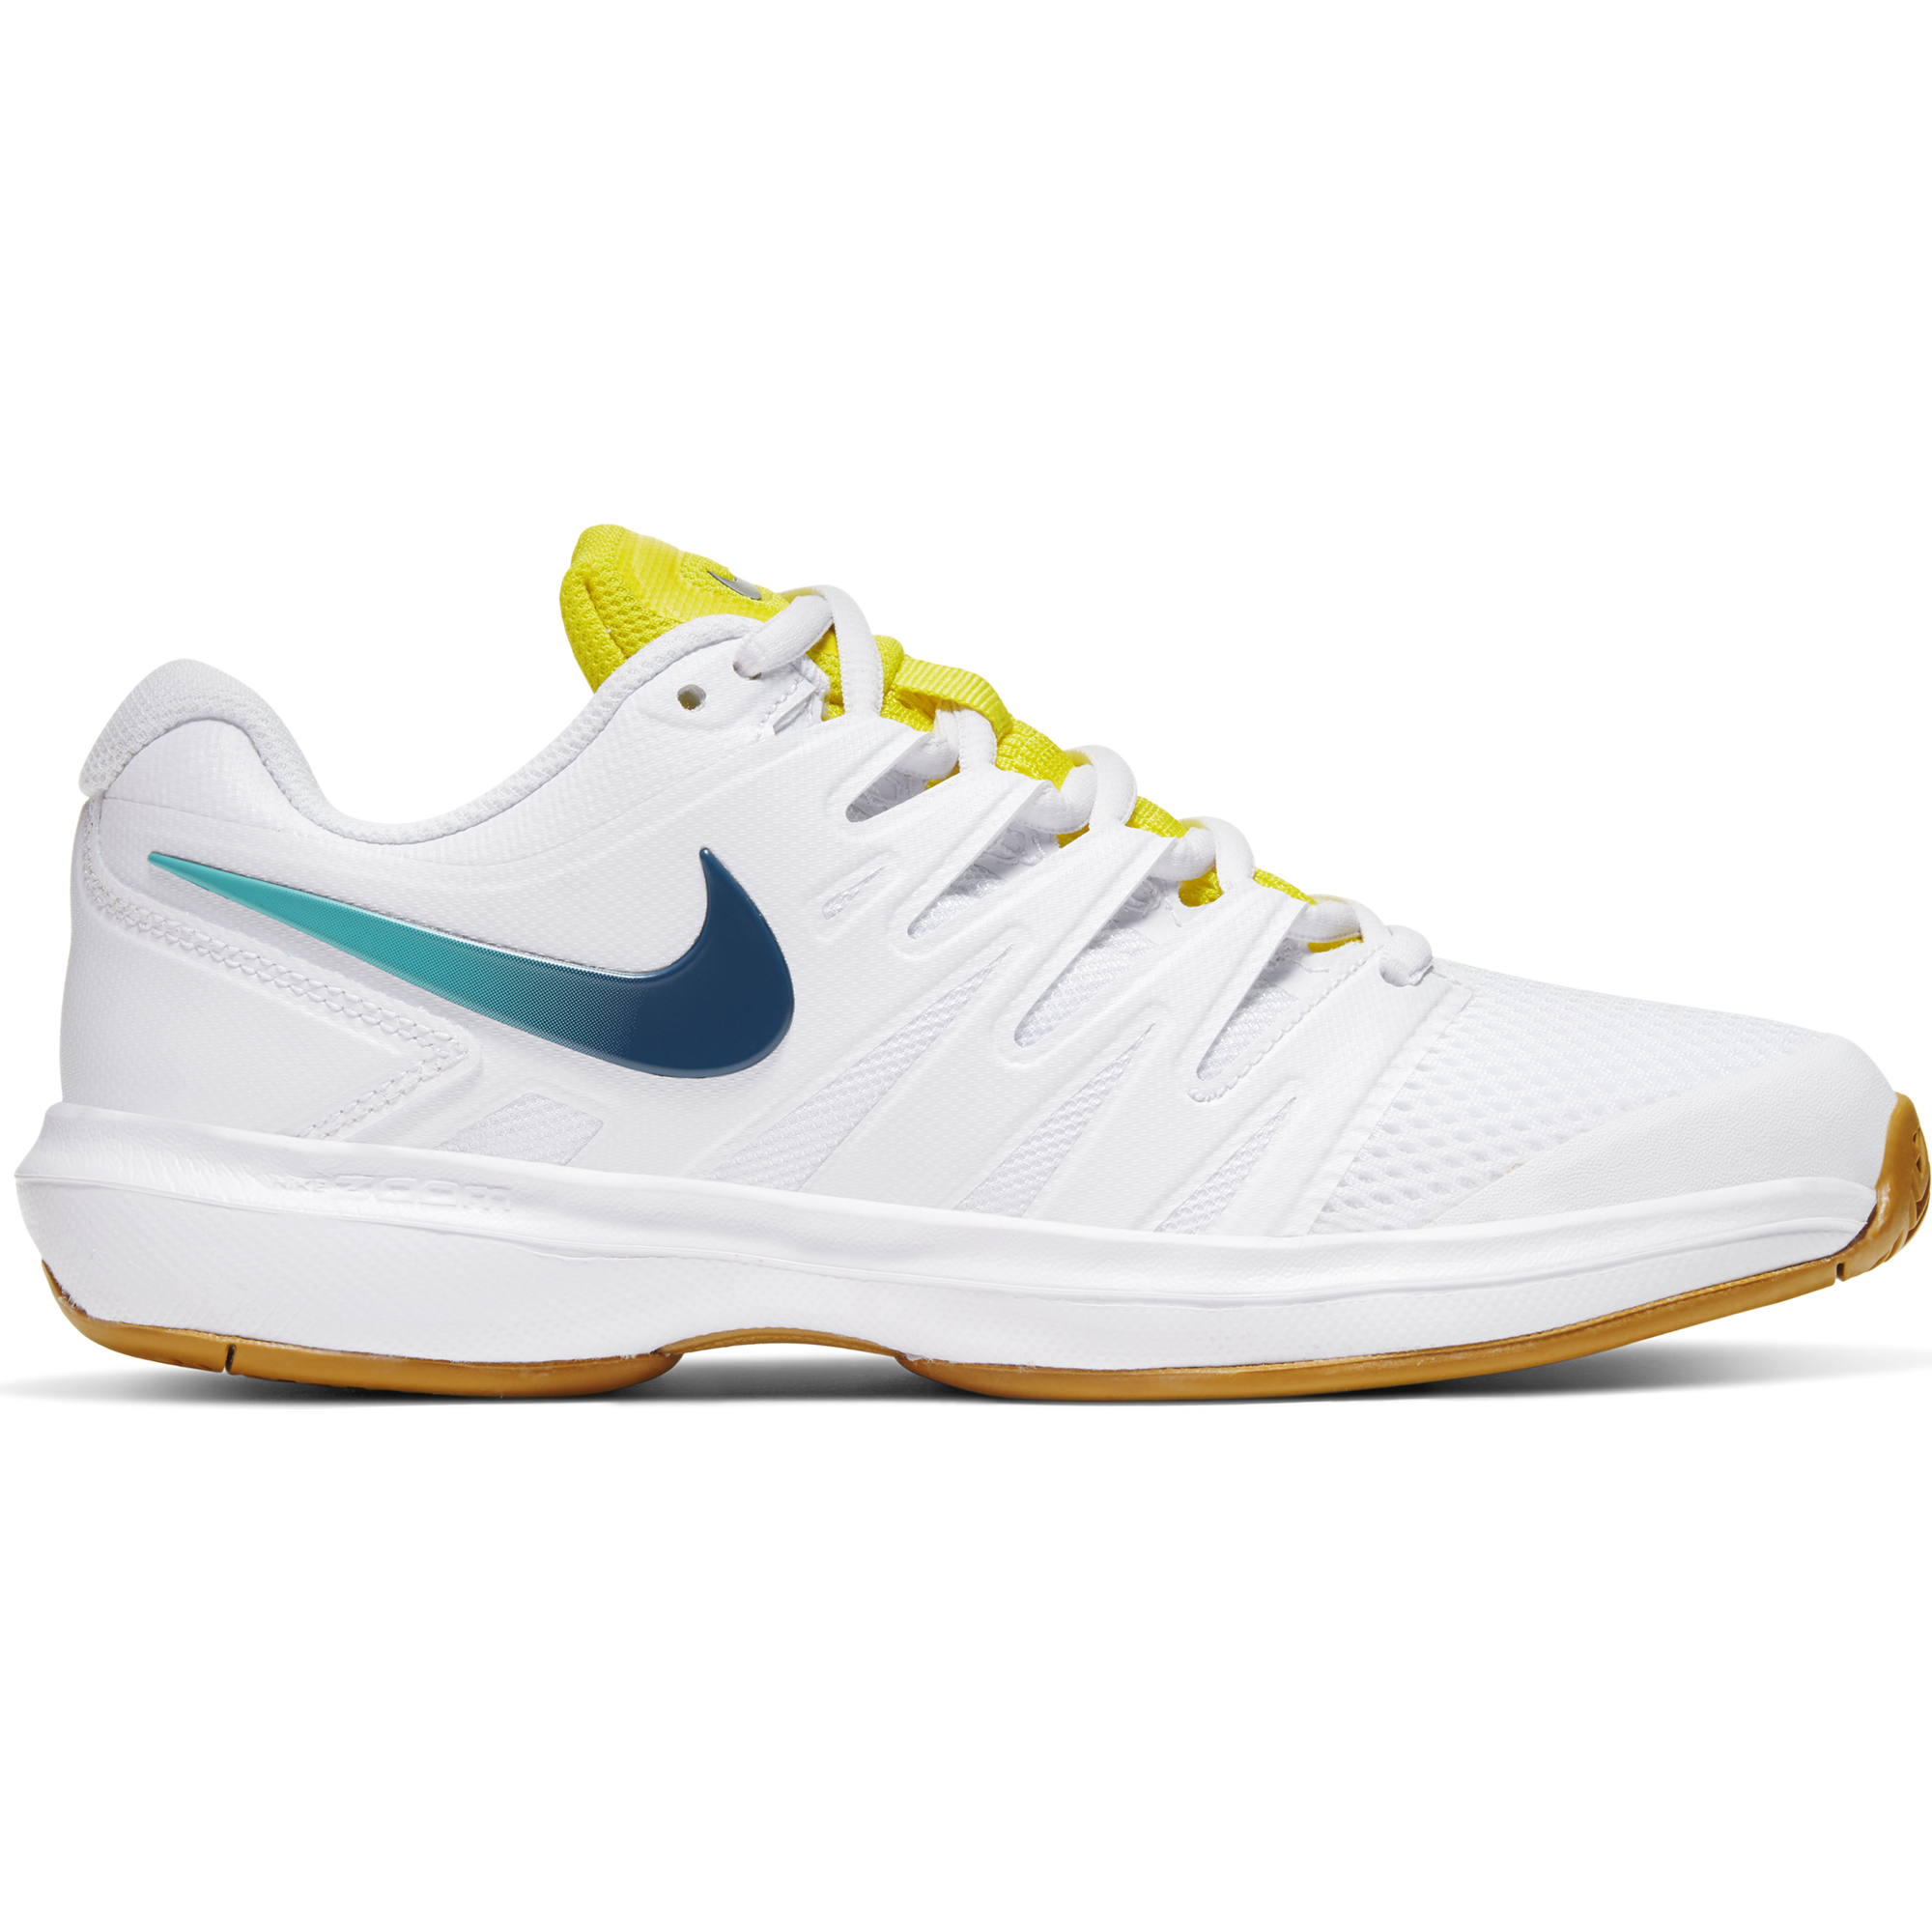 Air Zoom Prestige Women's Tennis Shoe - White/Yellow